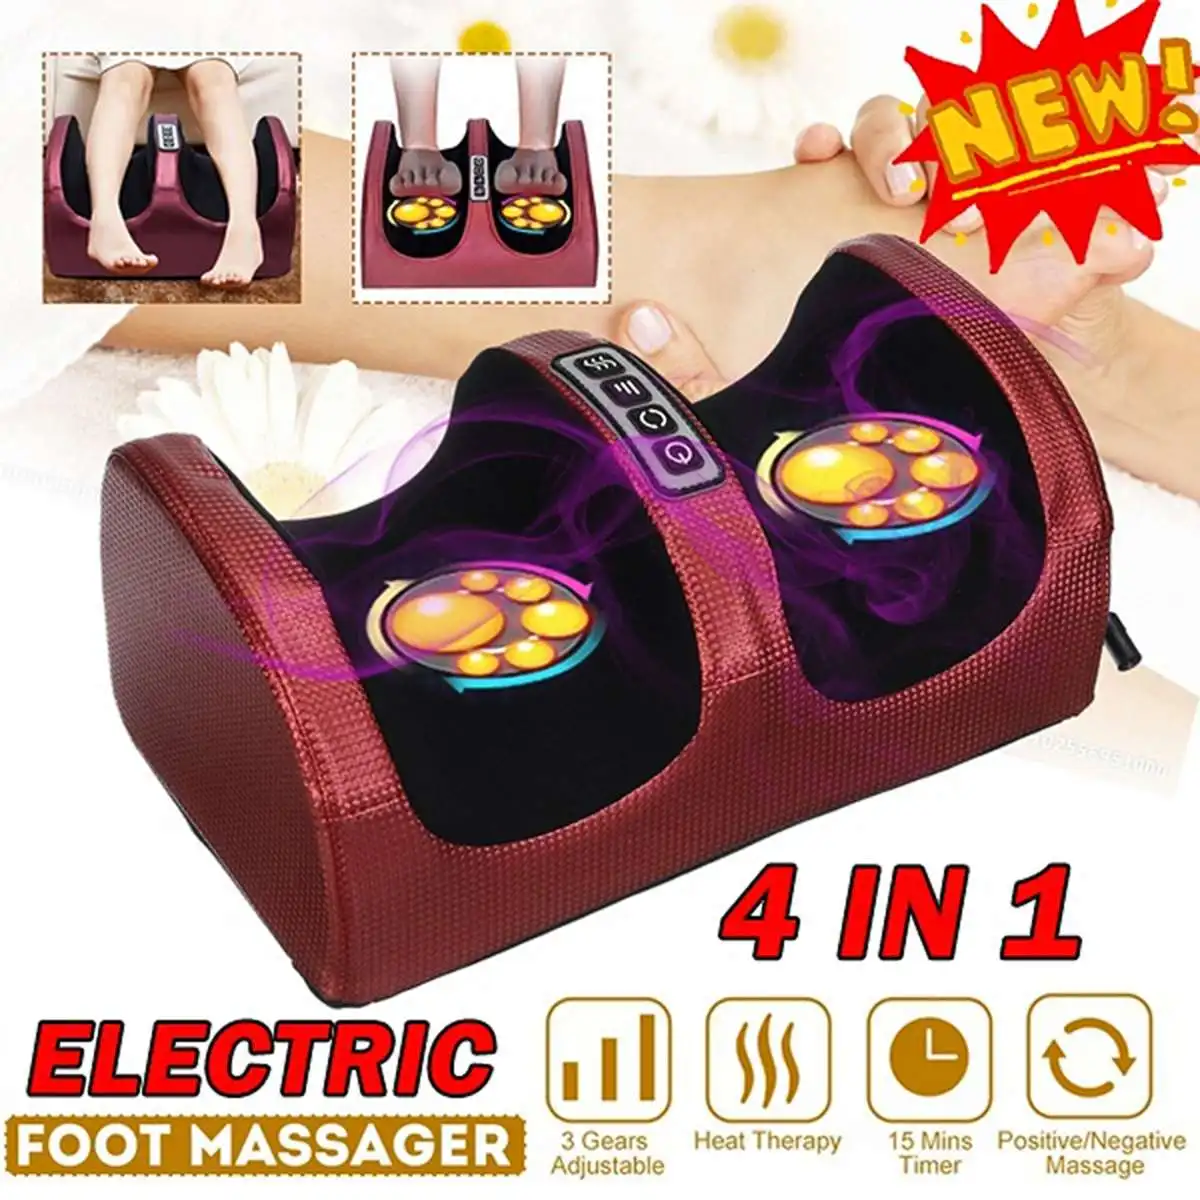 

110-240V Electric Heating Foot Body Massager Relaxation Kneading Roller Vibrator Machine Reflexology Calf Leg Pain Relief Relax